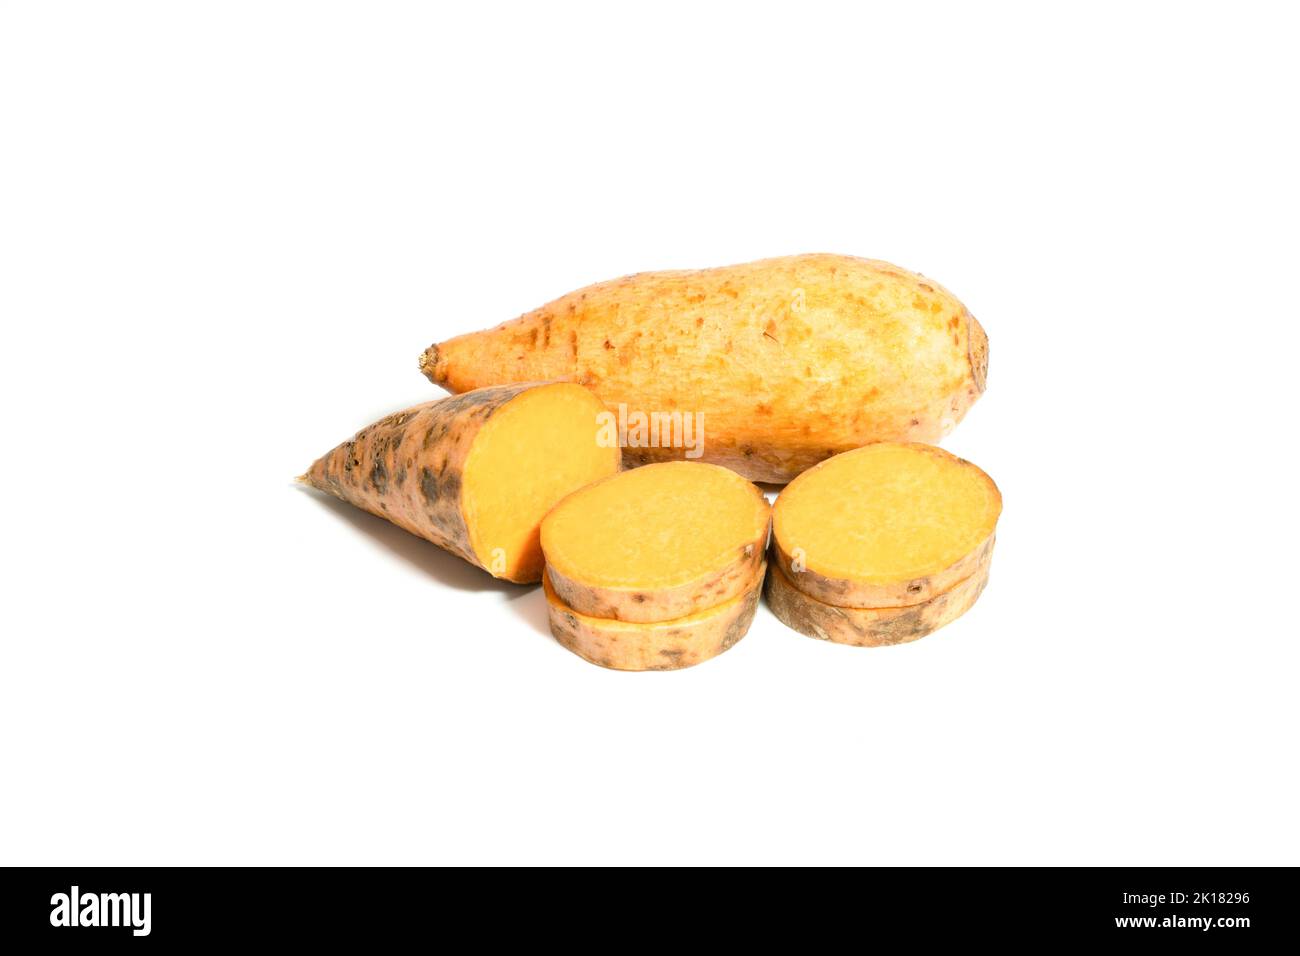 Sweet yellow potato uncooked isolated on white background closeup. Stock Photo